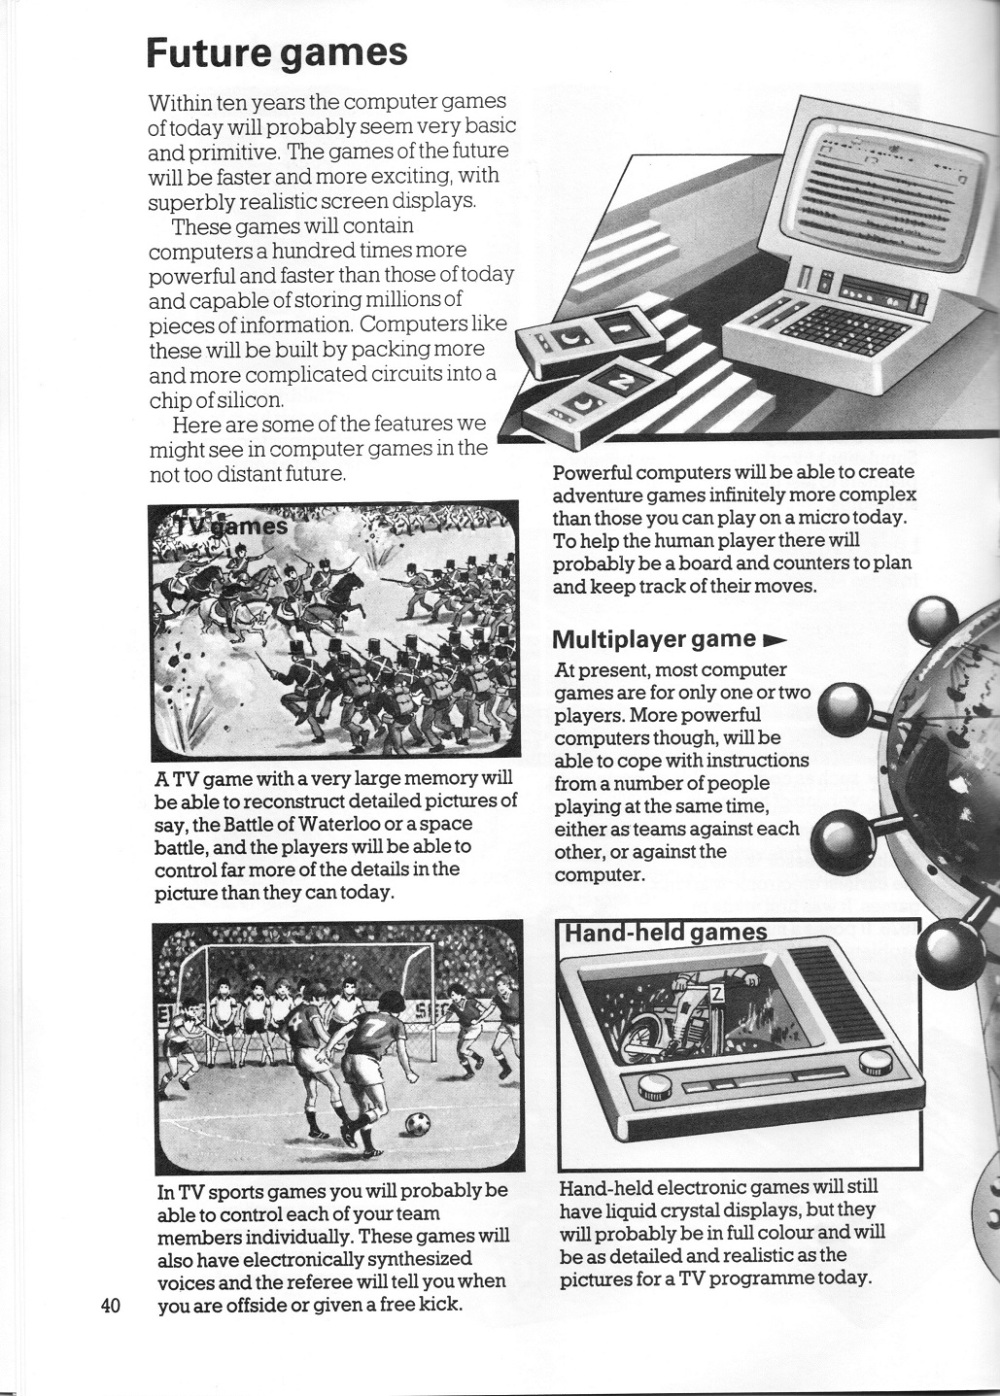 computer-games-1982-5046.jpg?w=1000&h=13